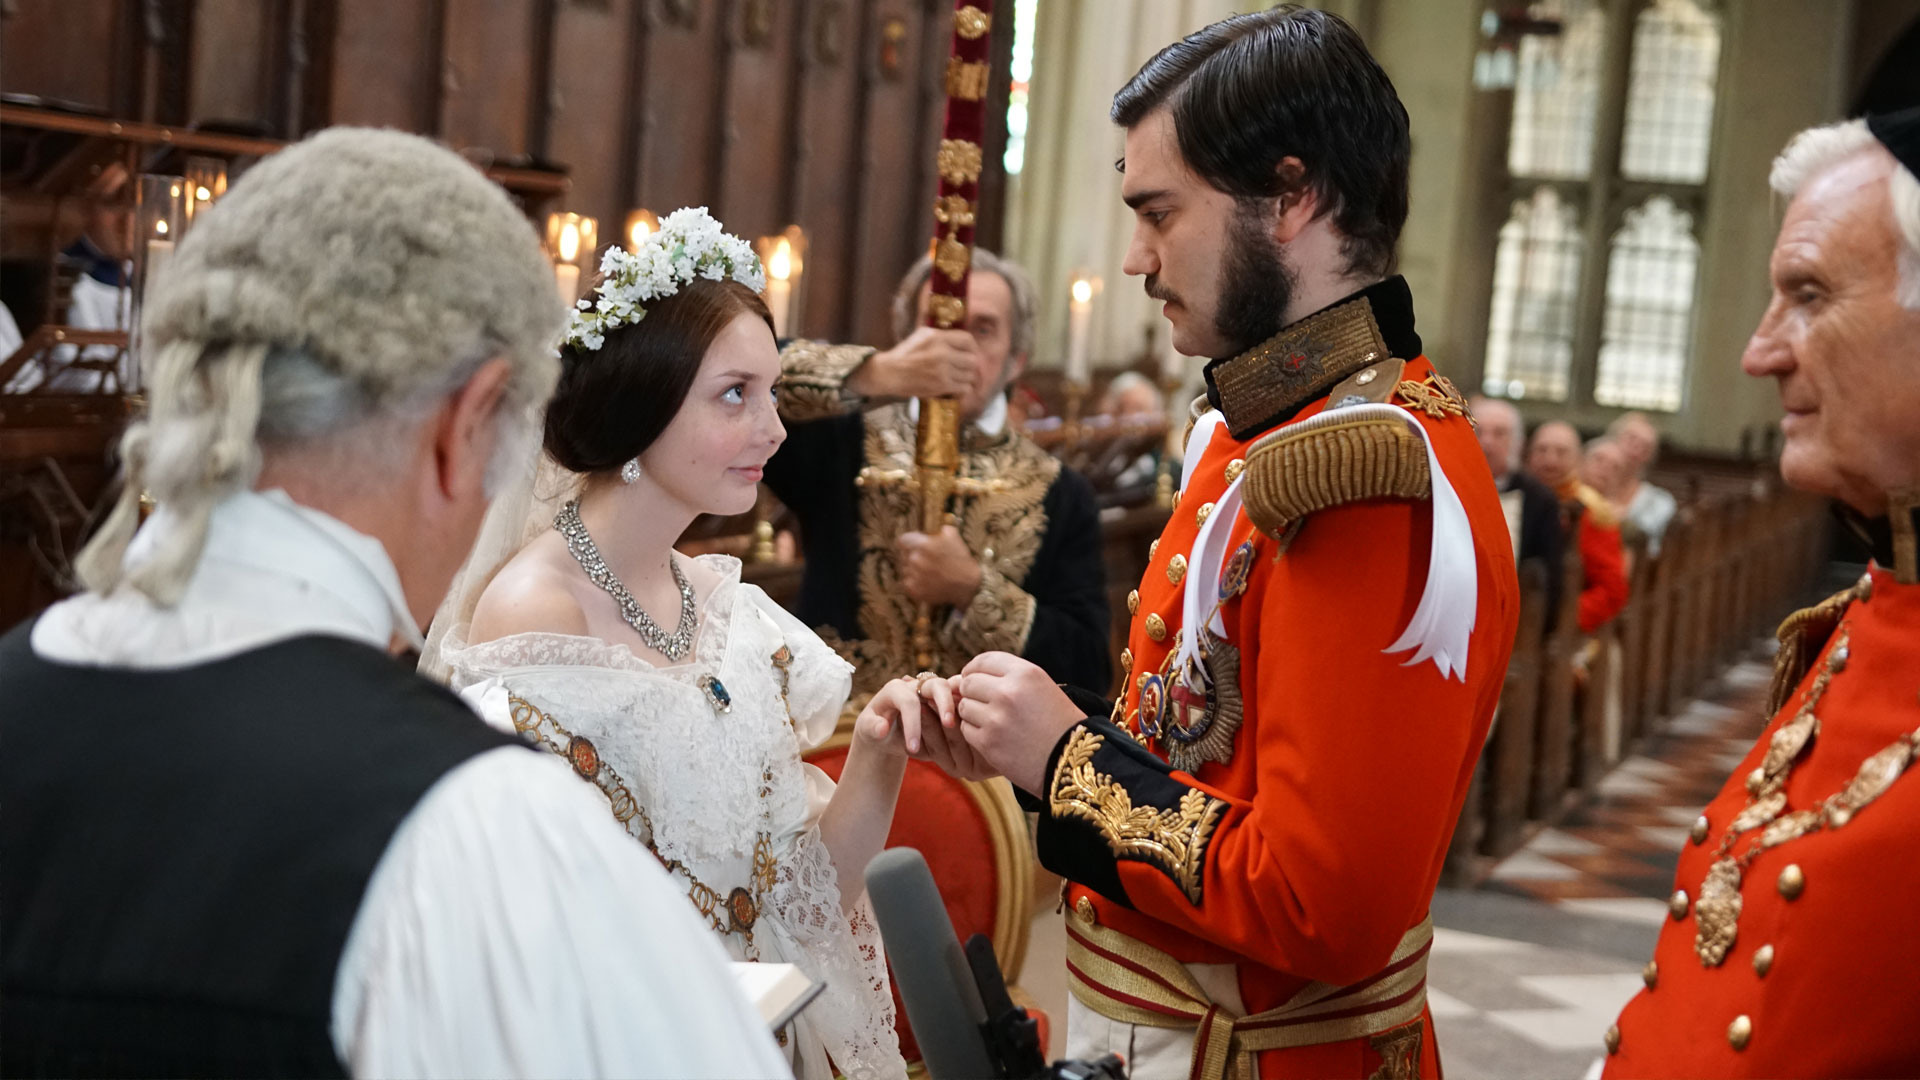 Victoria & Albert: The Wedding